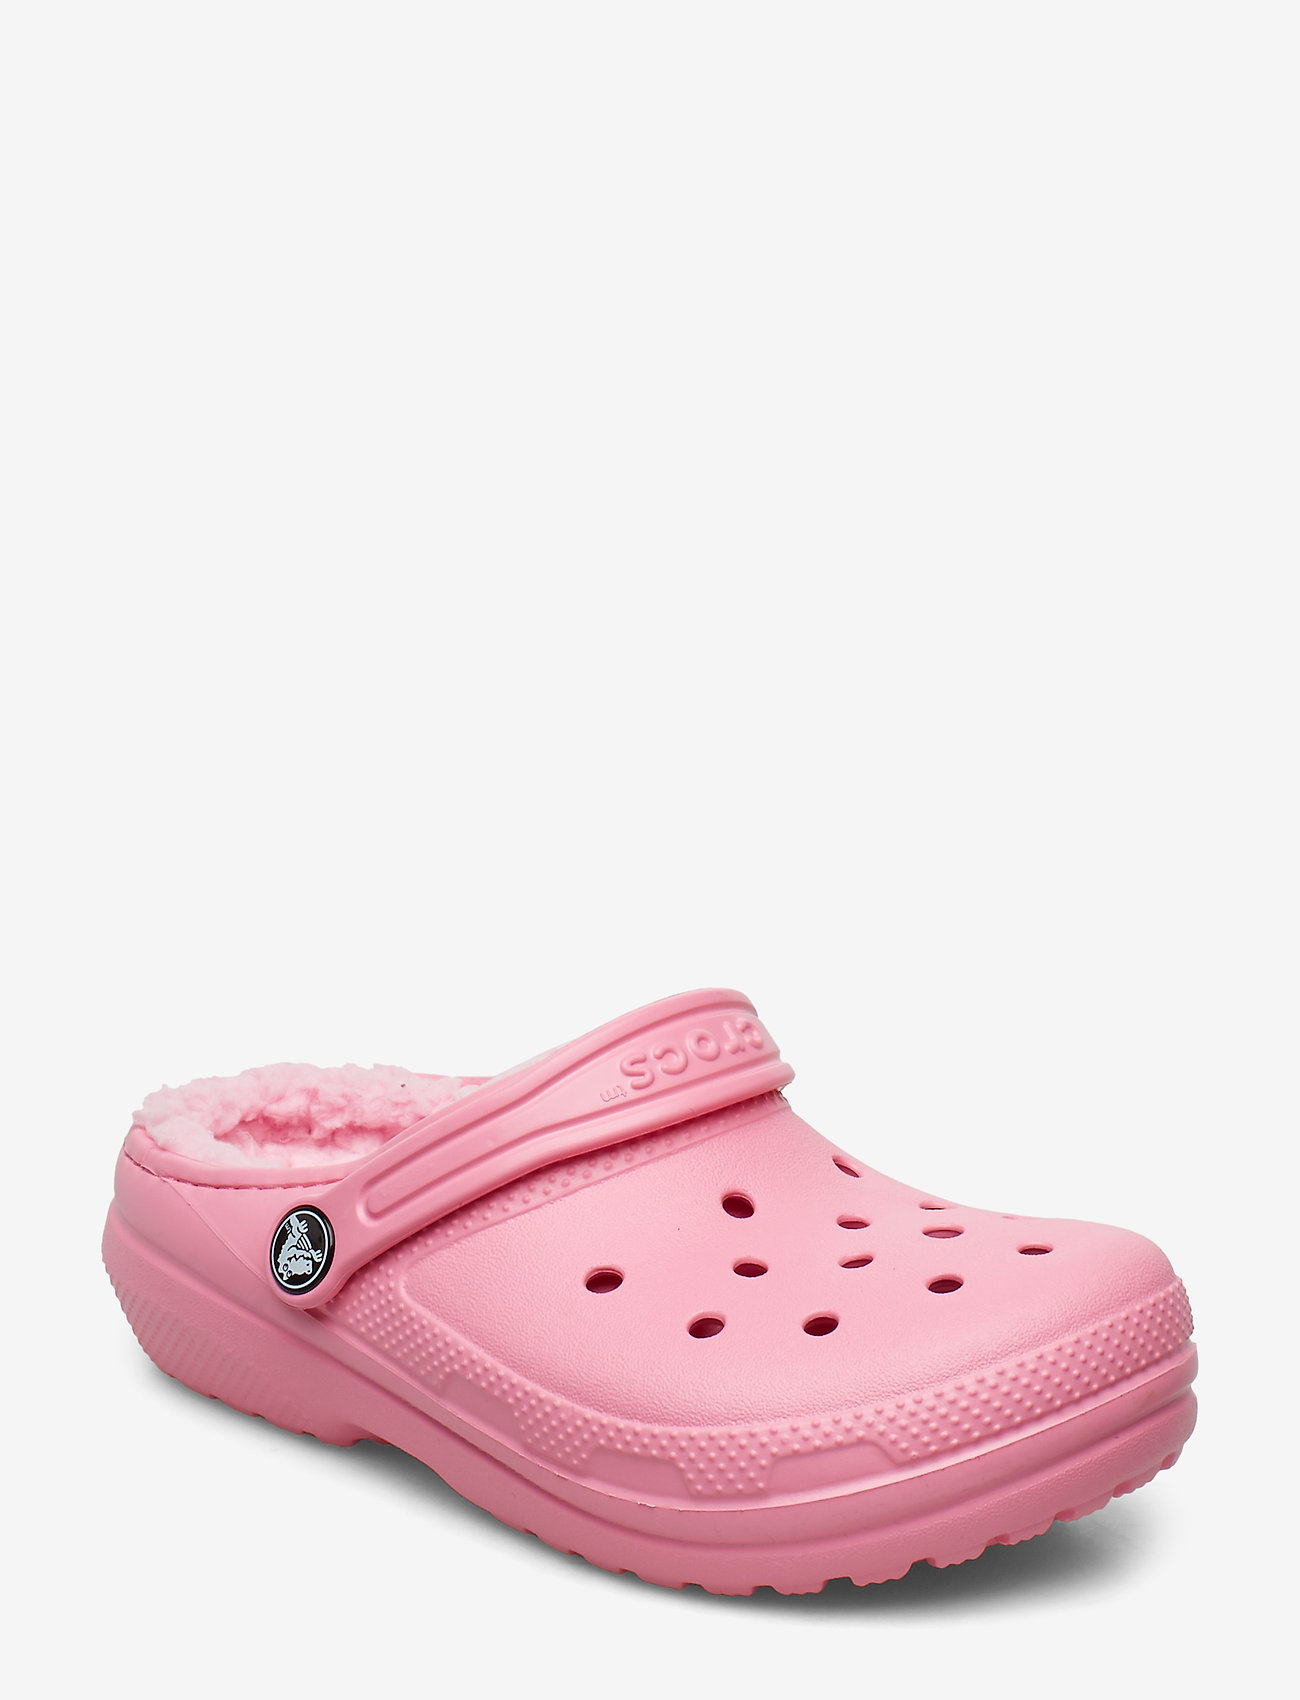 Crocs Classic Lined Clog in Pink Lemonade New Season